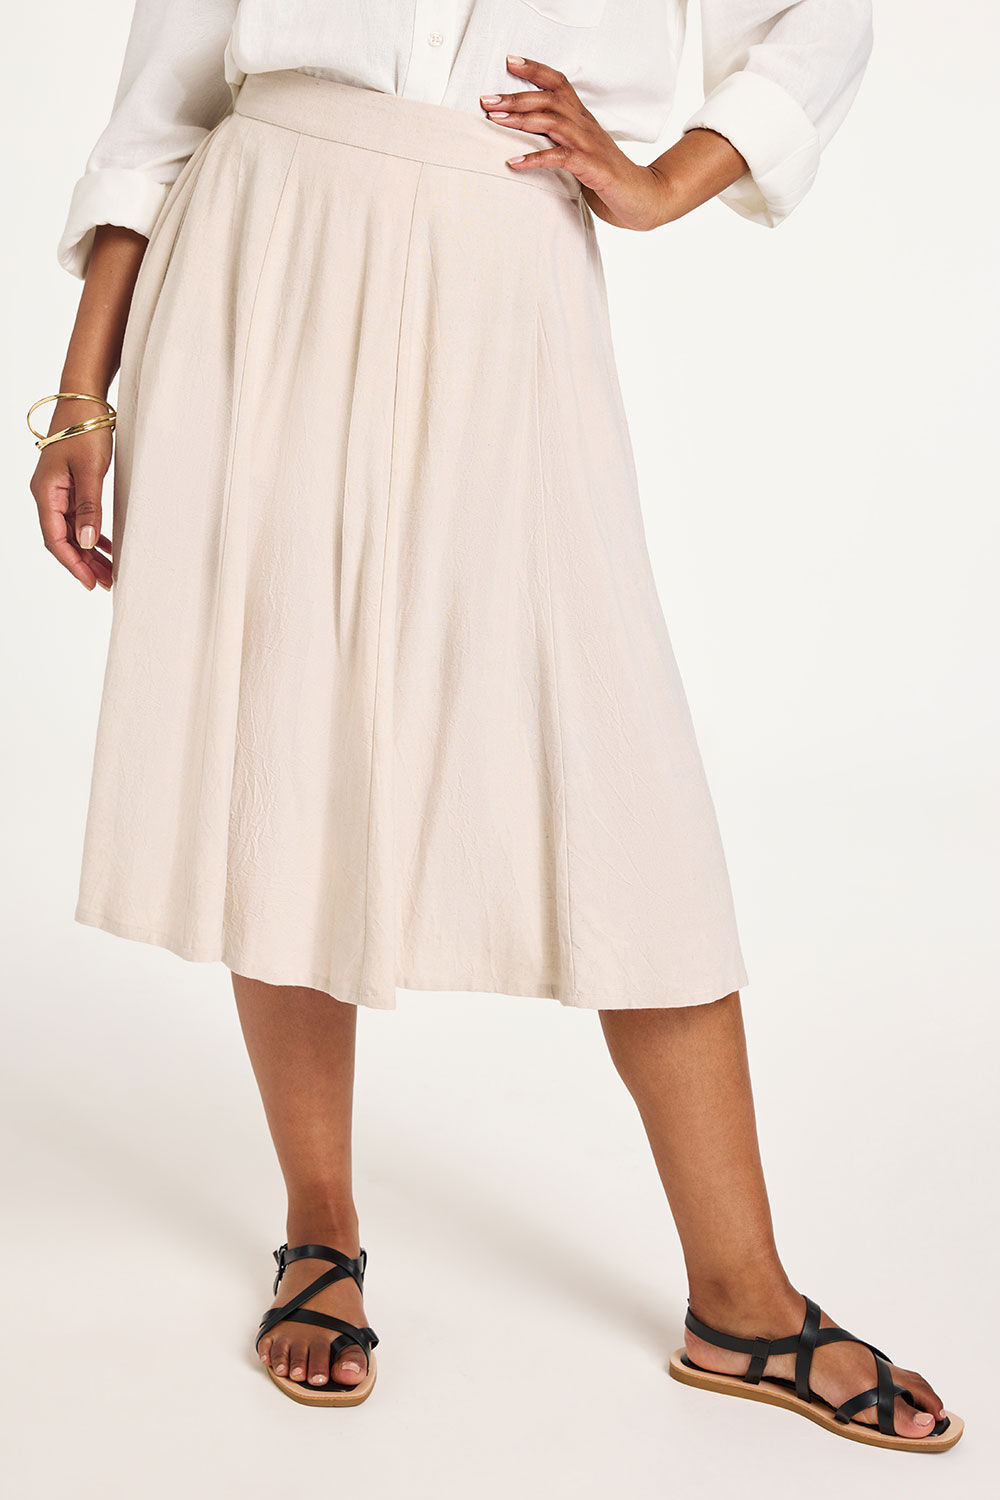 Bonmarche Stone Plain Flippy Skirt, Size: 18